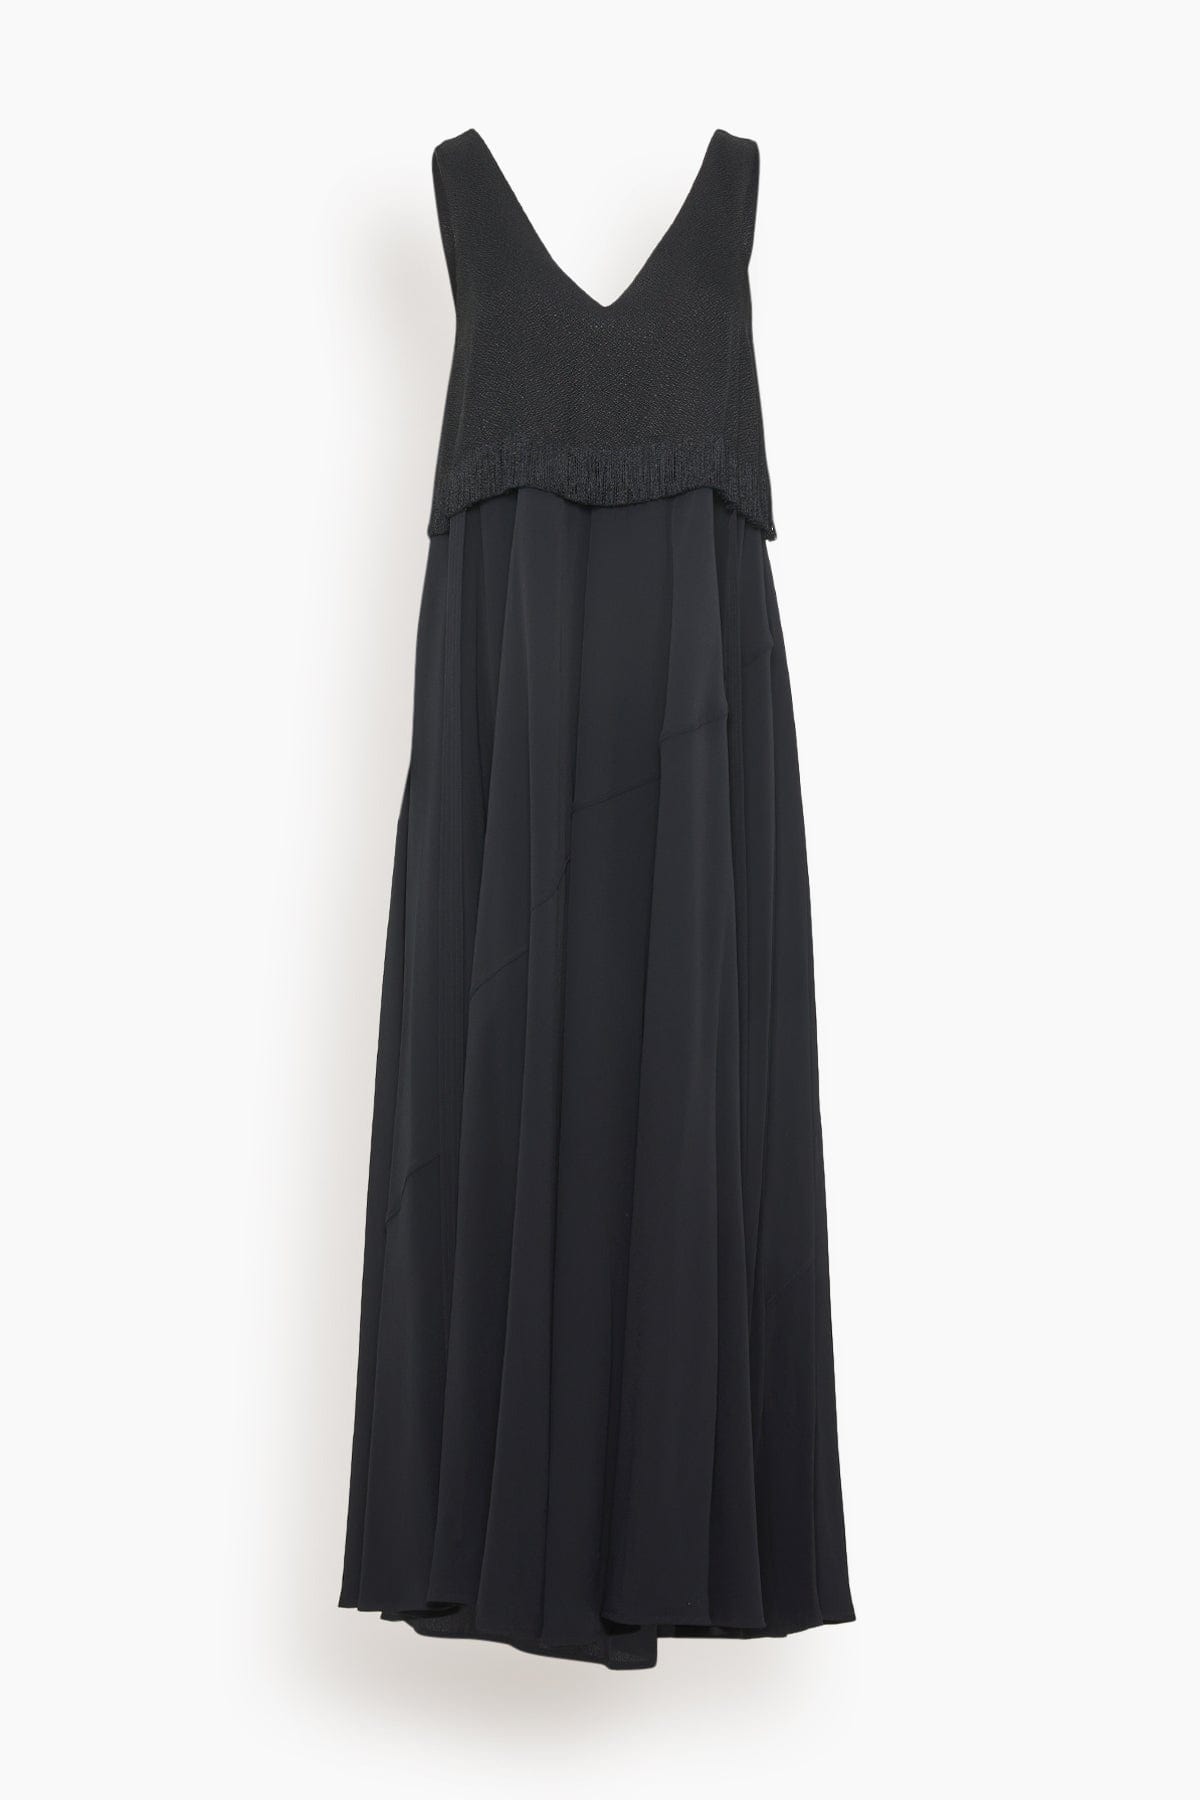 Proenza Schouler Dresses Lynda Dress in Black